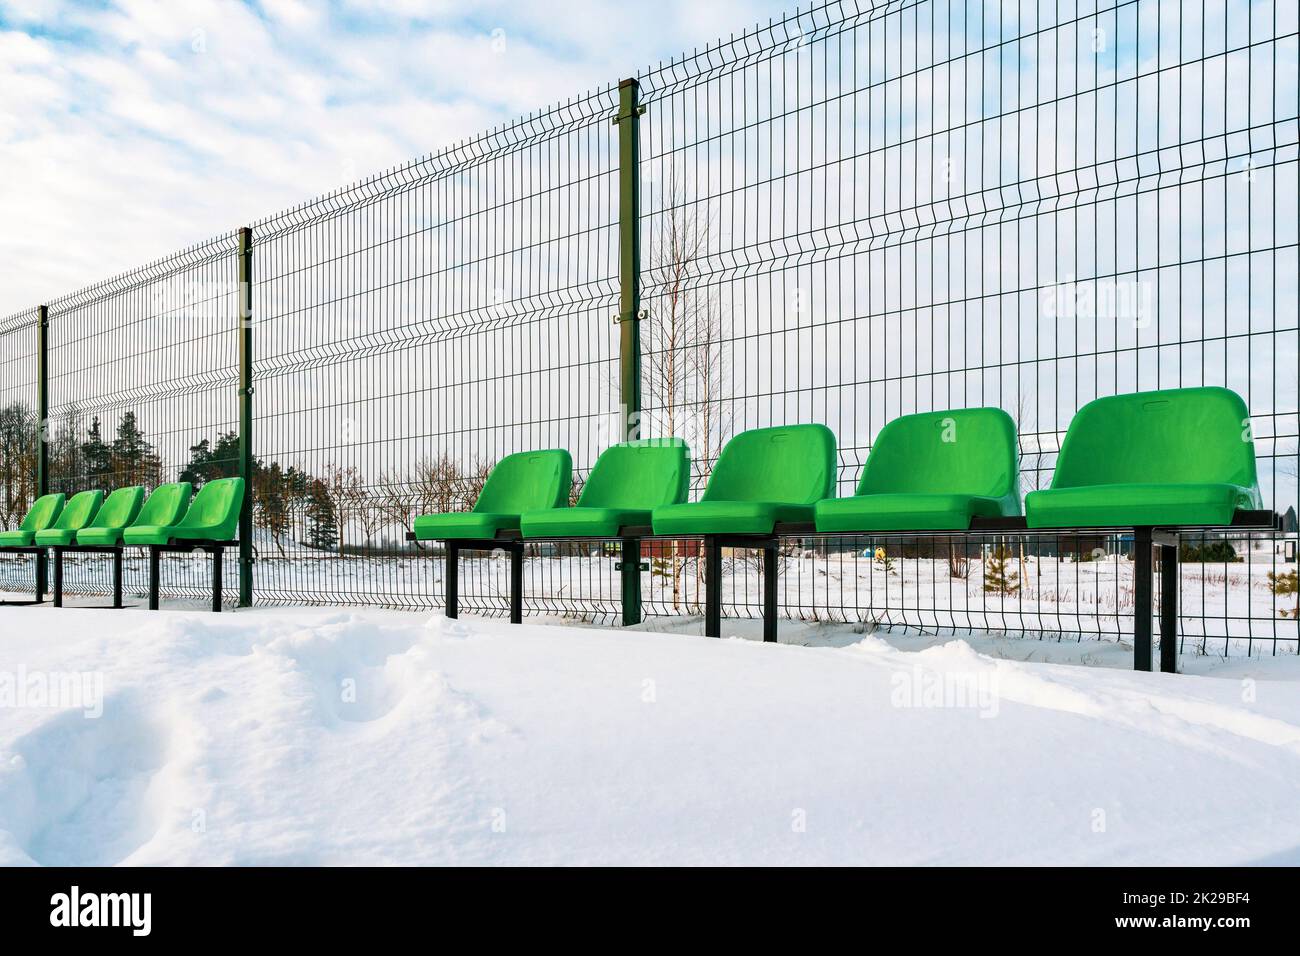 The row of plastic green seats at sports stadium Stock Photo